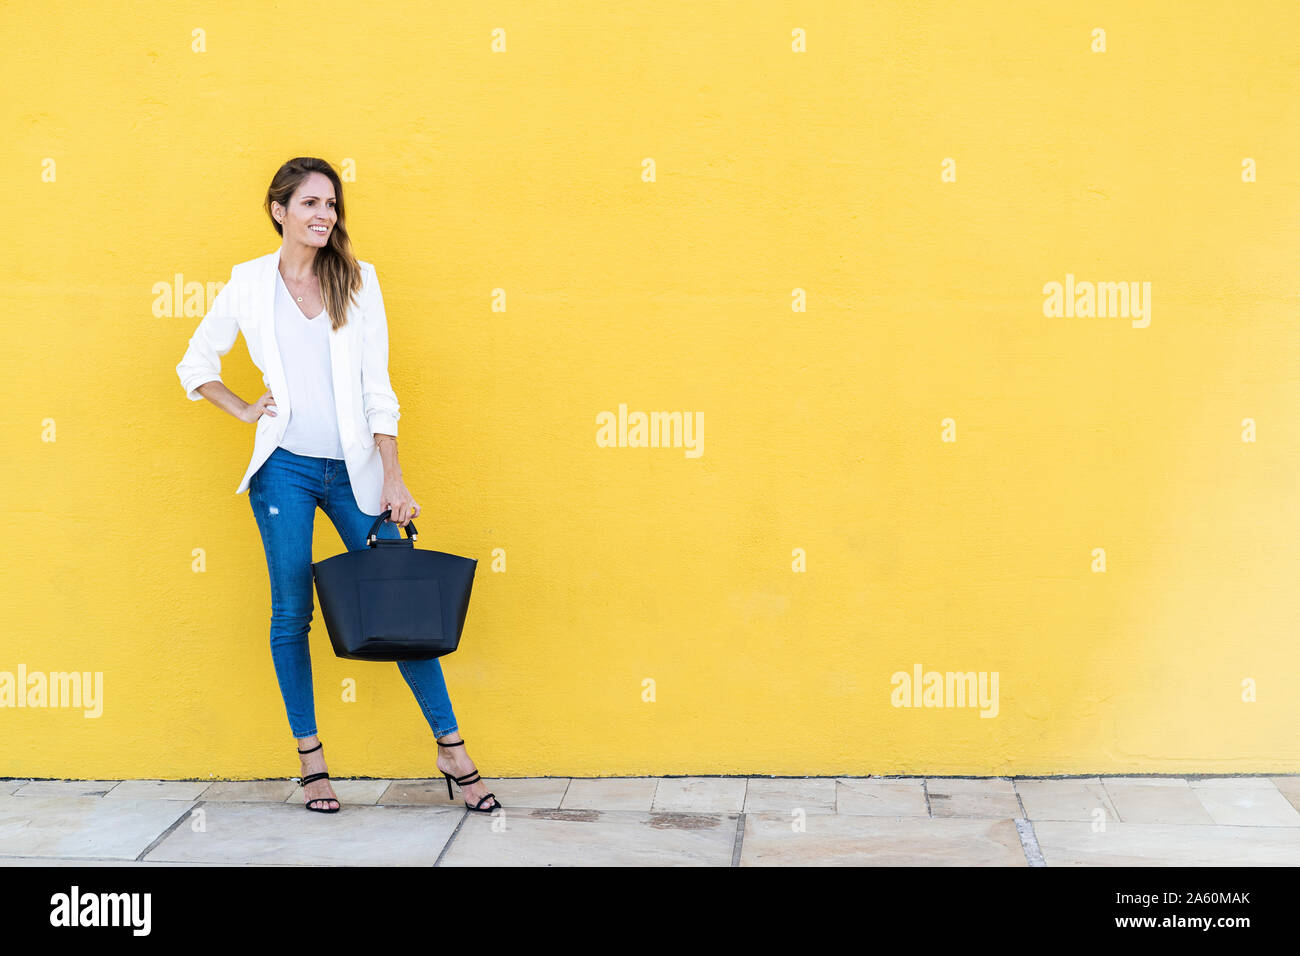 Smiling woman standing at a yellow wall holding a handbag Stock Photo